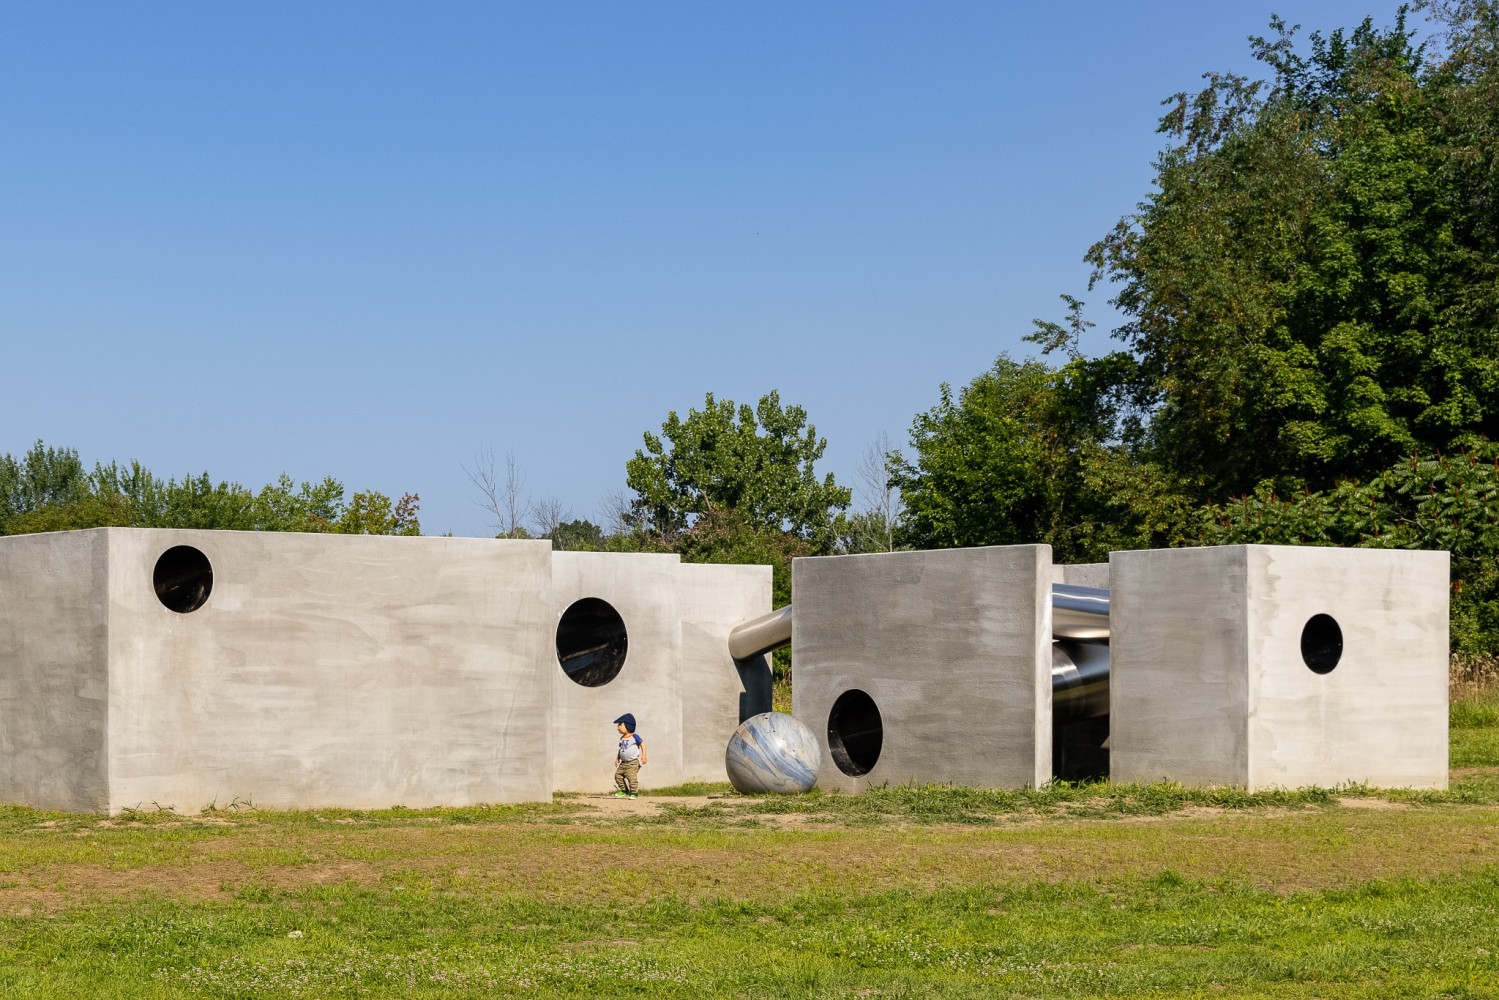 Alicja Kwade,&amp;nbsp;
TunnelTeller, 2018

Stainless steel, concrete, natural stone (Macaubas azul)
Installation view: Art Omi, Ghent, NY, 2021
Photo: Alon Koppel

&amp;nbsp;





